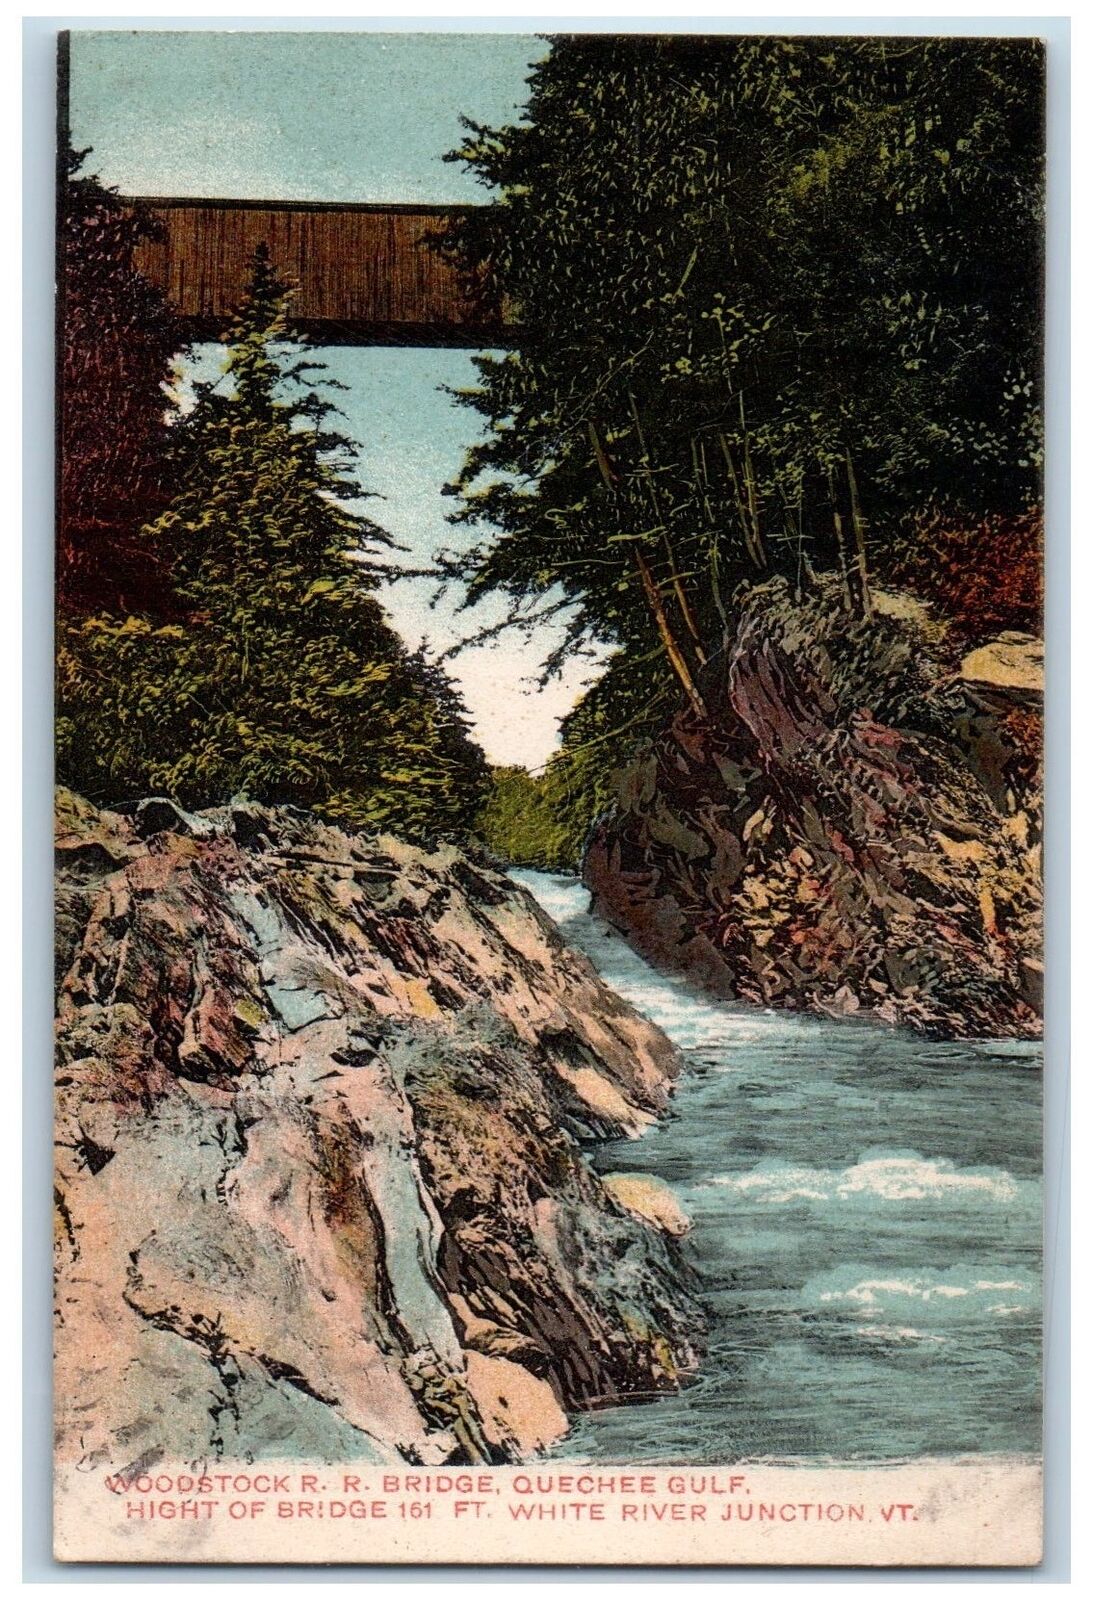 1907 Woodstock Railroad Bridge Quechee Gulf Vermont VT Posted Vintage Postcard